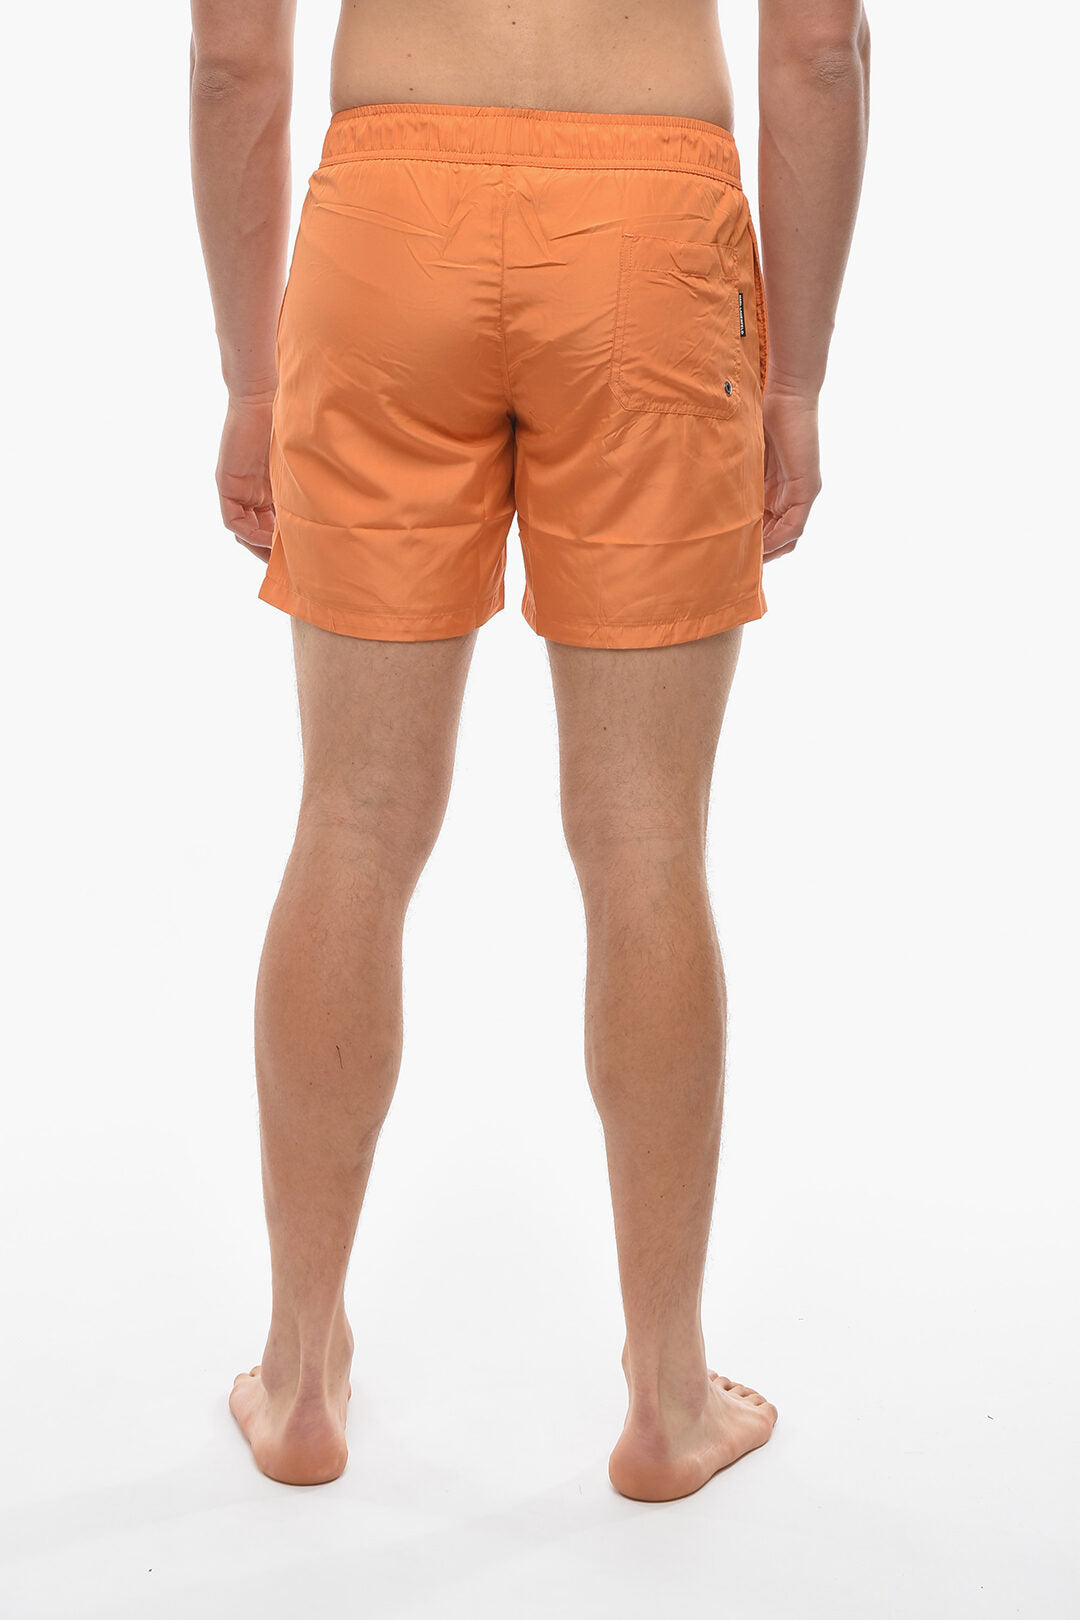 Rue st-guillame plain 3-pocket orange boxer swimsuit